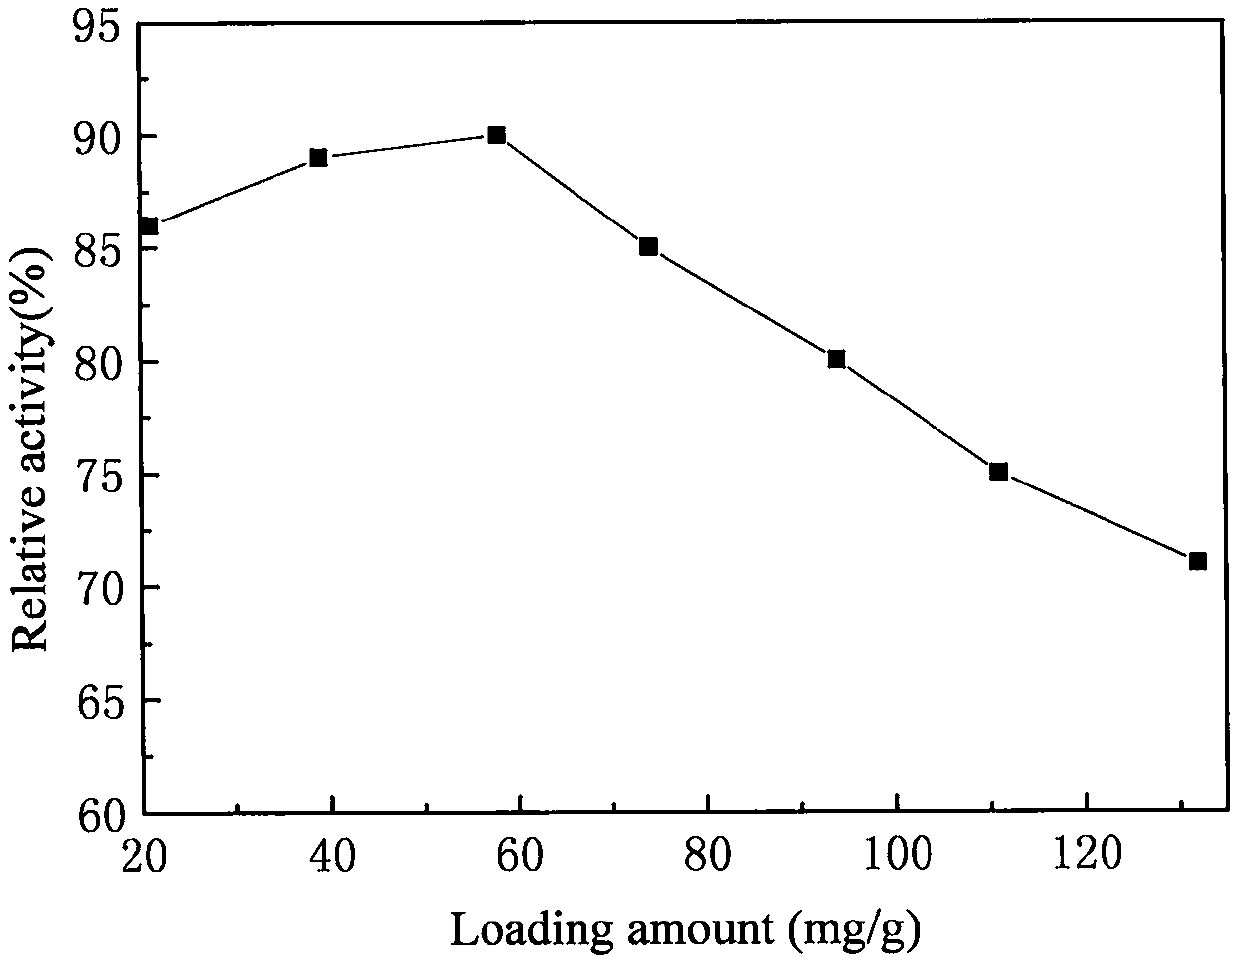 Co-crosslinking immobilization method for acid urease